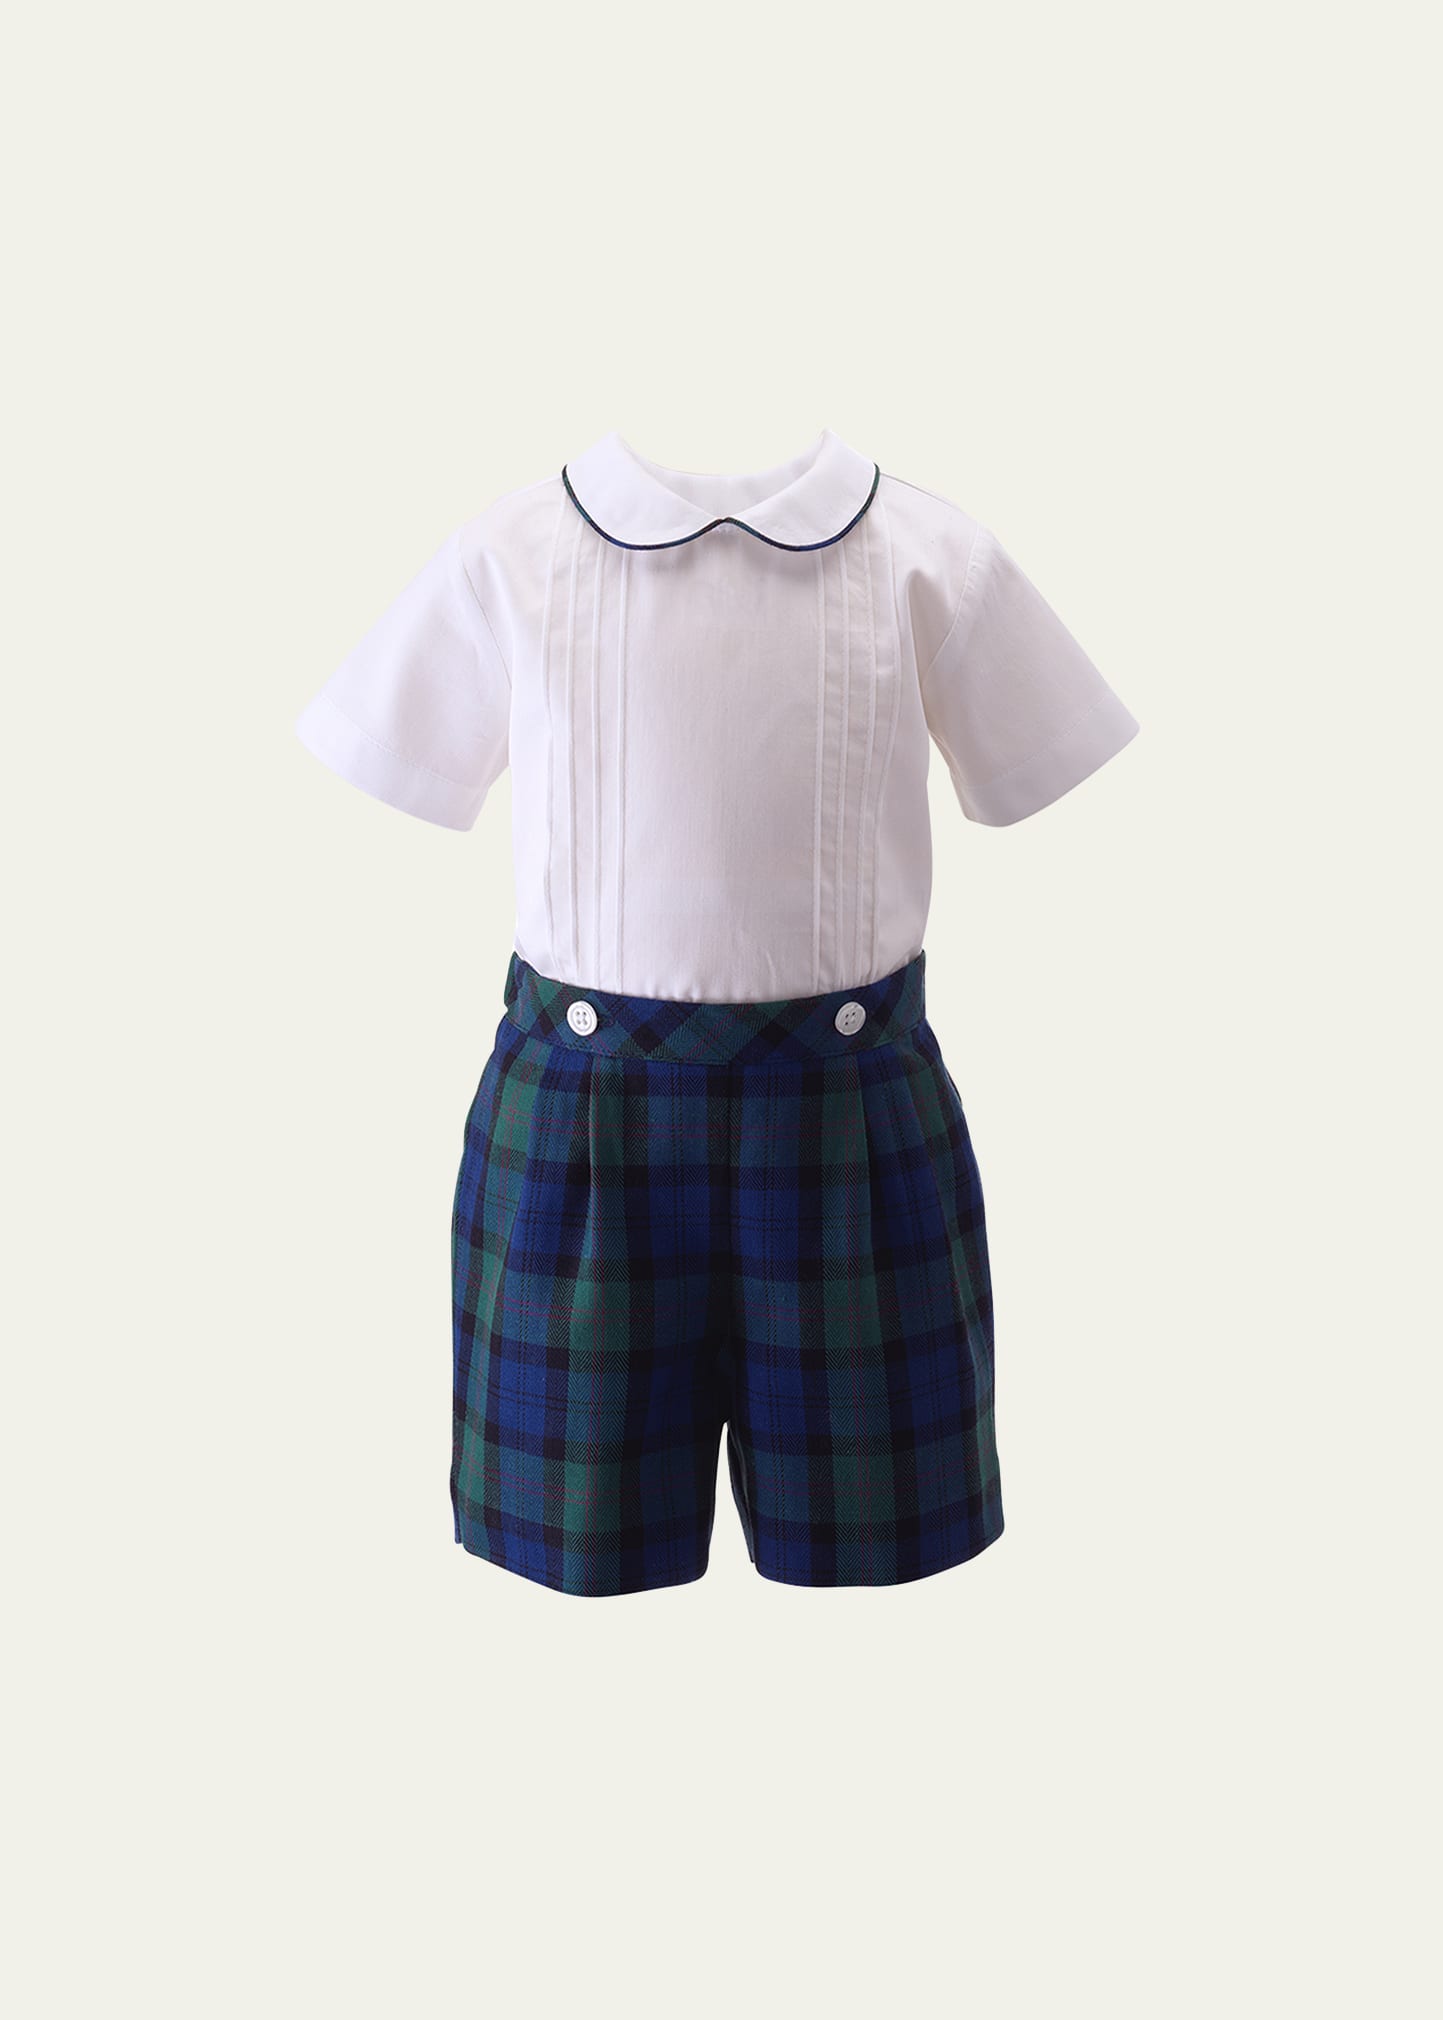 Boy's Tartan Shirt & Shorts Set, Size 6M-24M